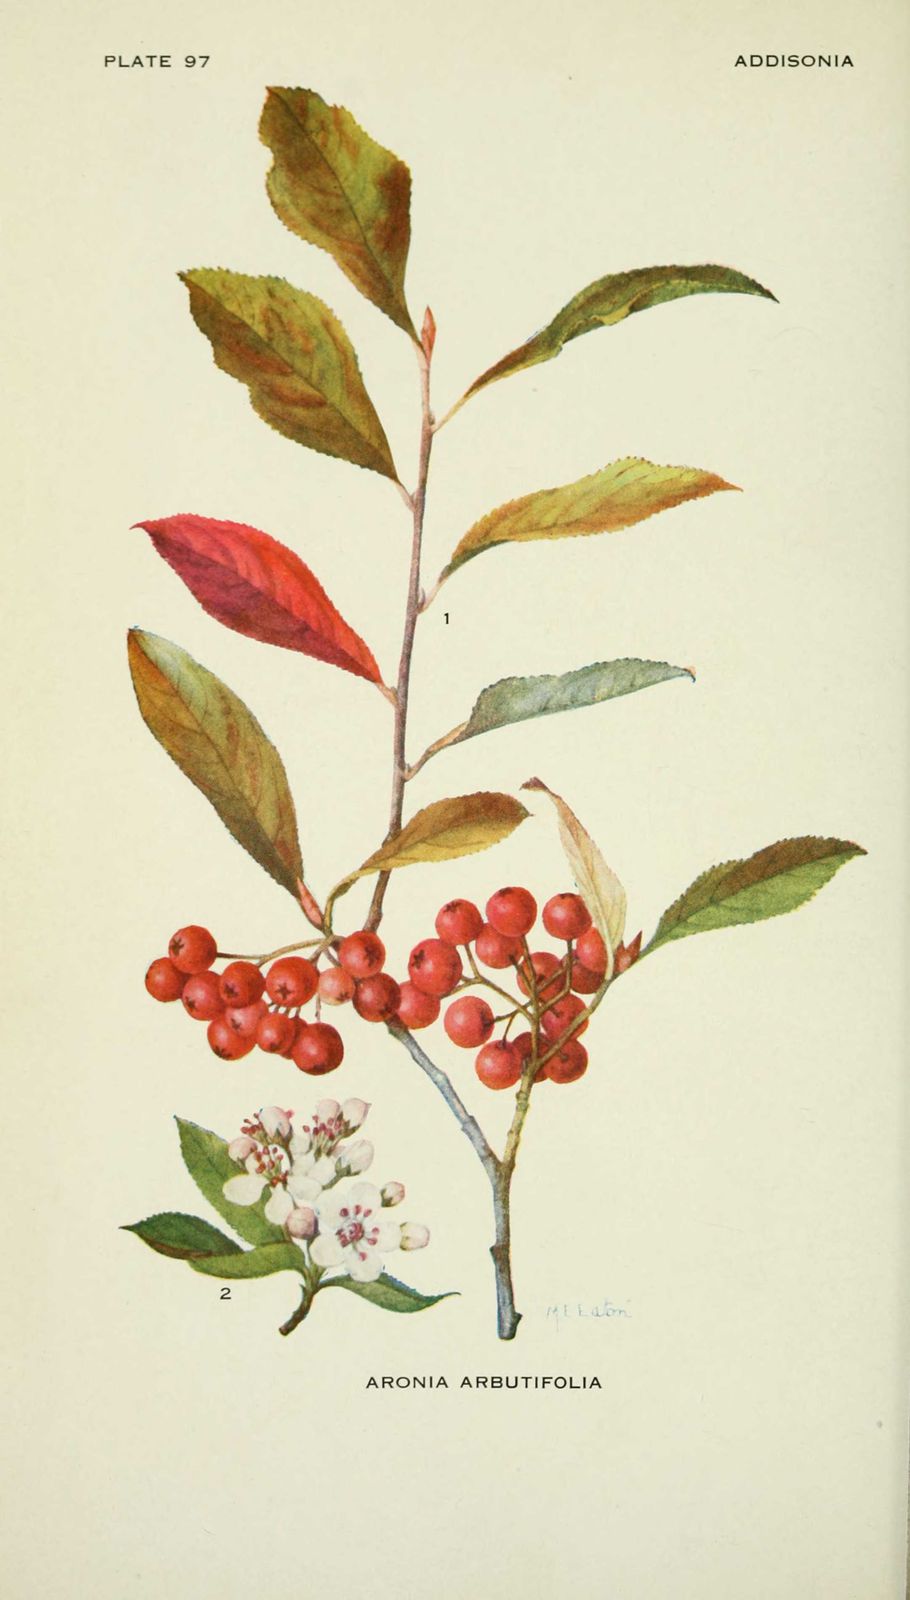 Dessin-illustration flore : aronia arbutifolia - aronie a feuilles d'arbousier